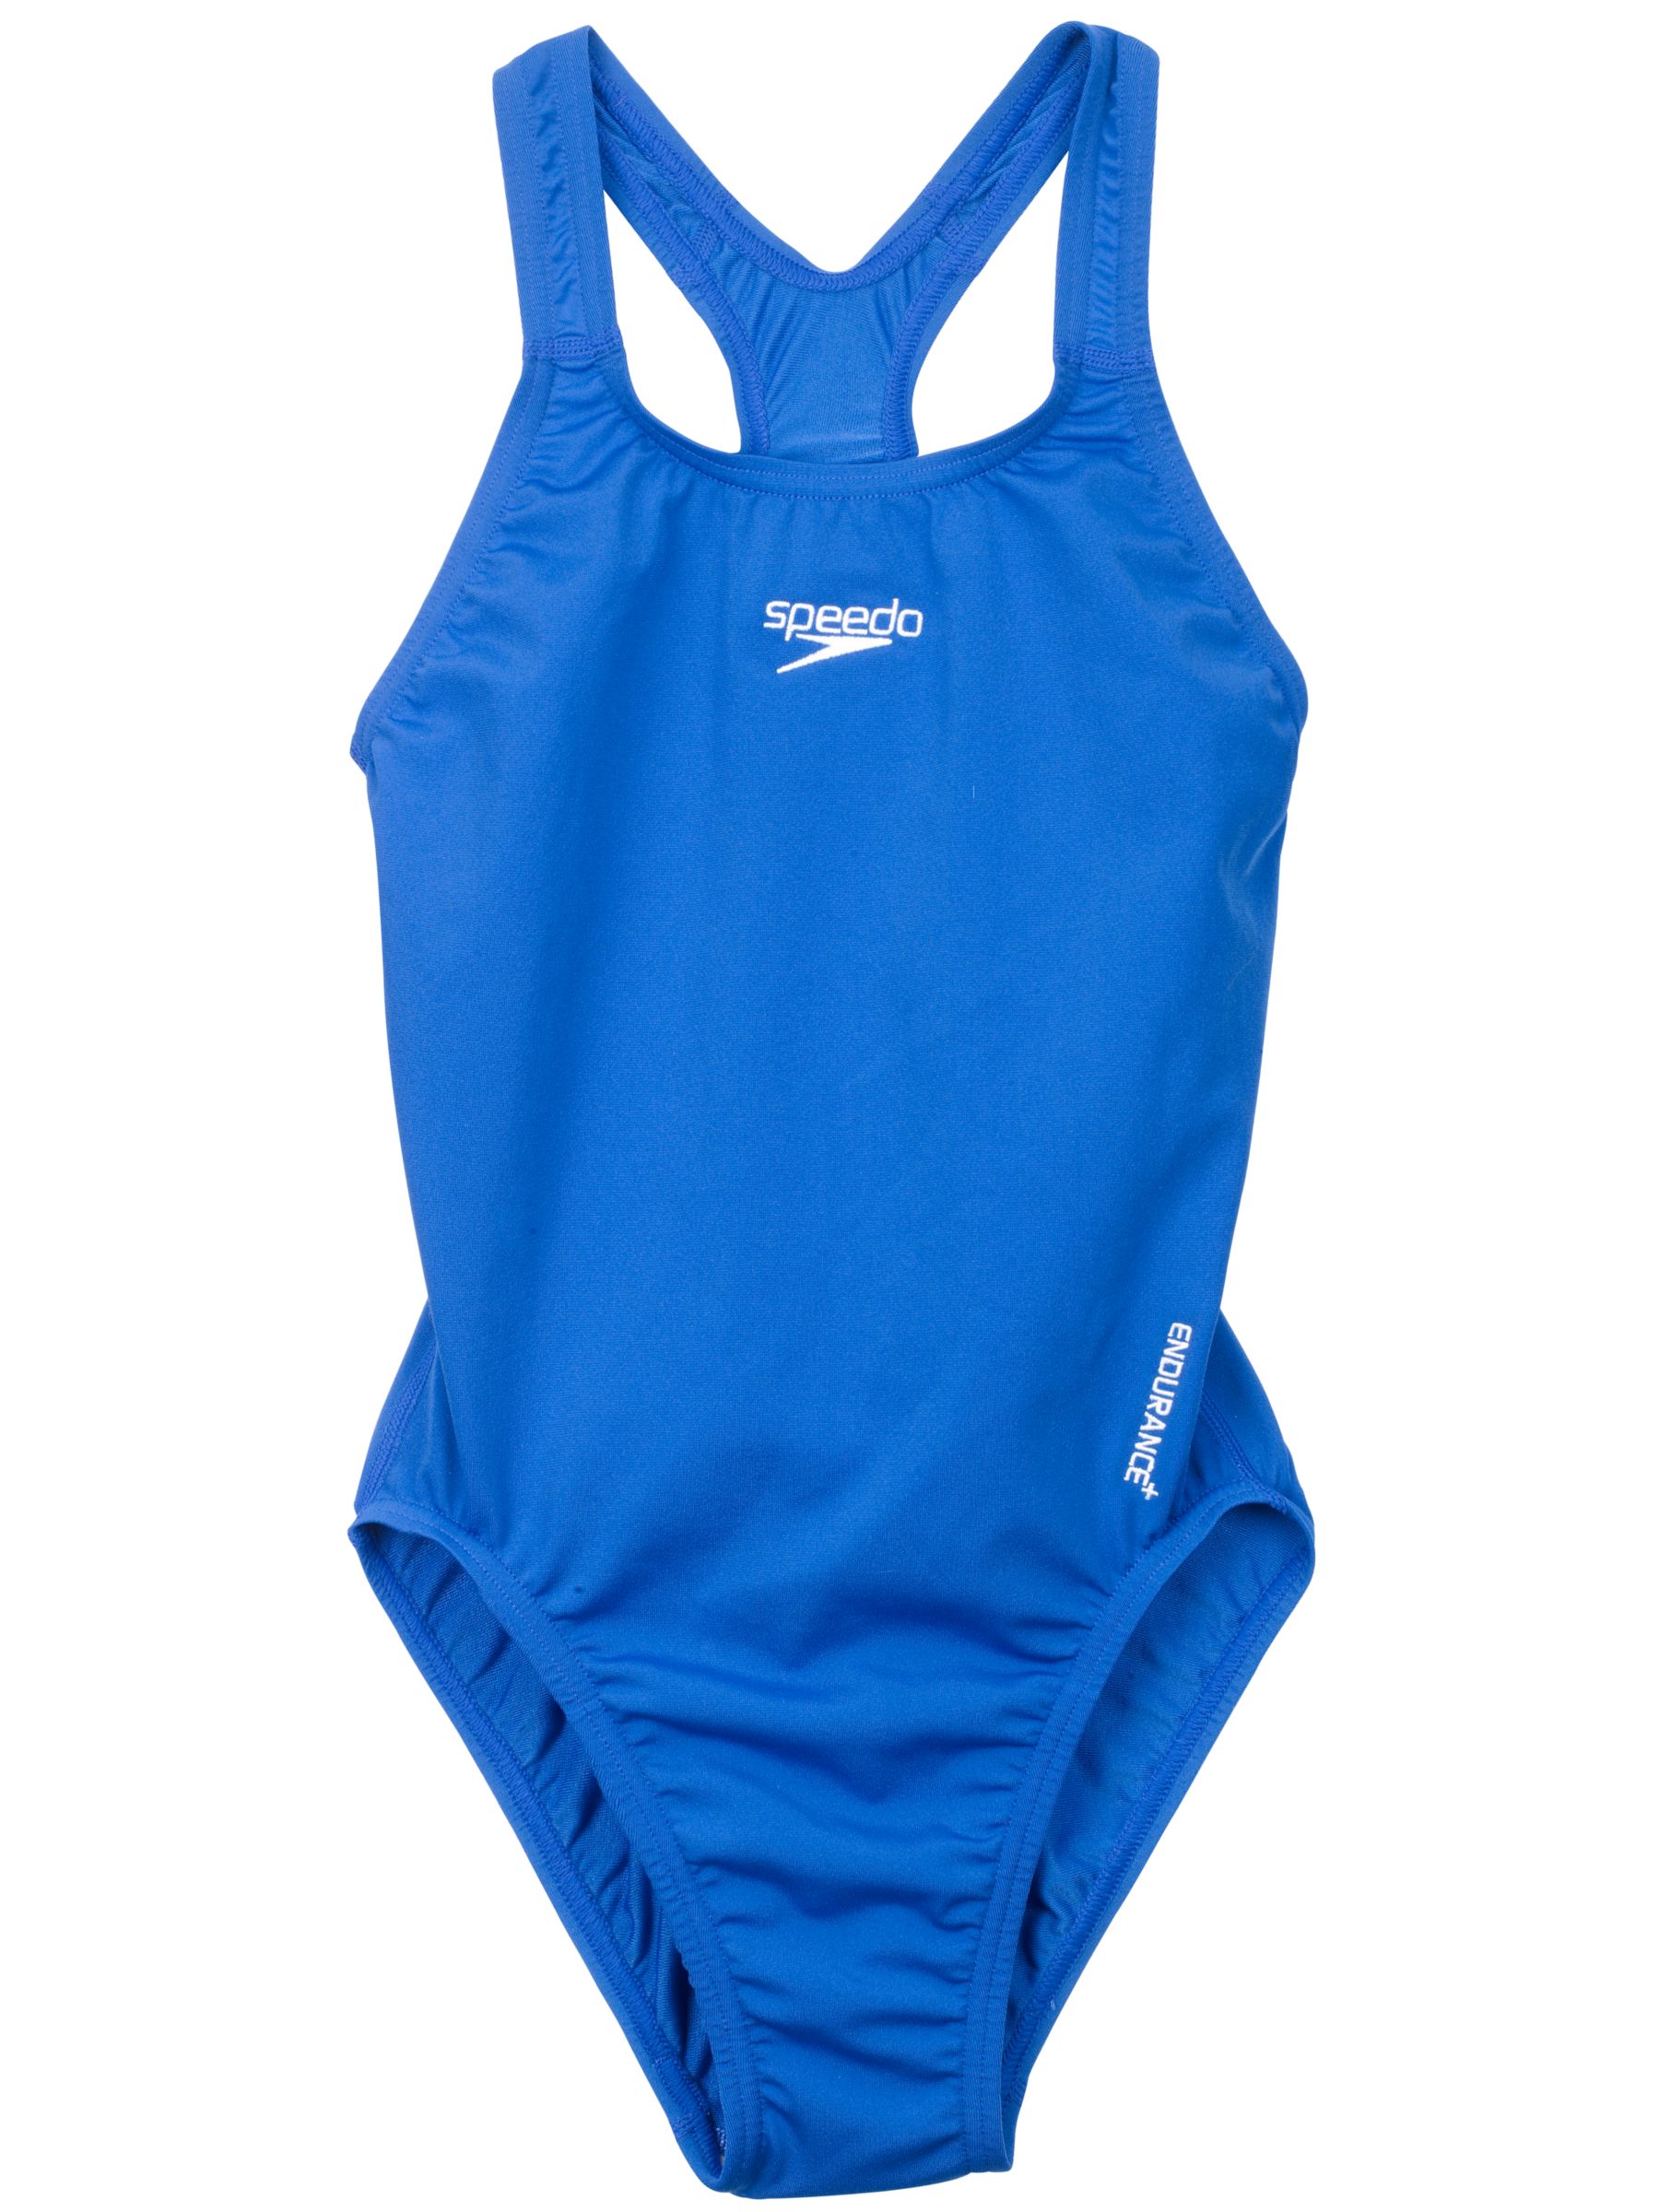 Speedo Medalist Swimsuit, Blue, 4 Years